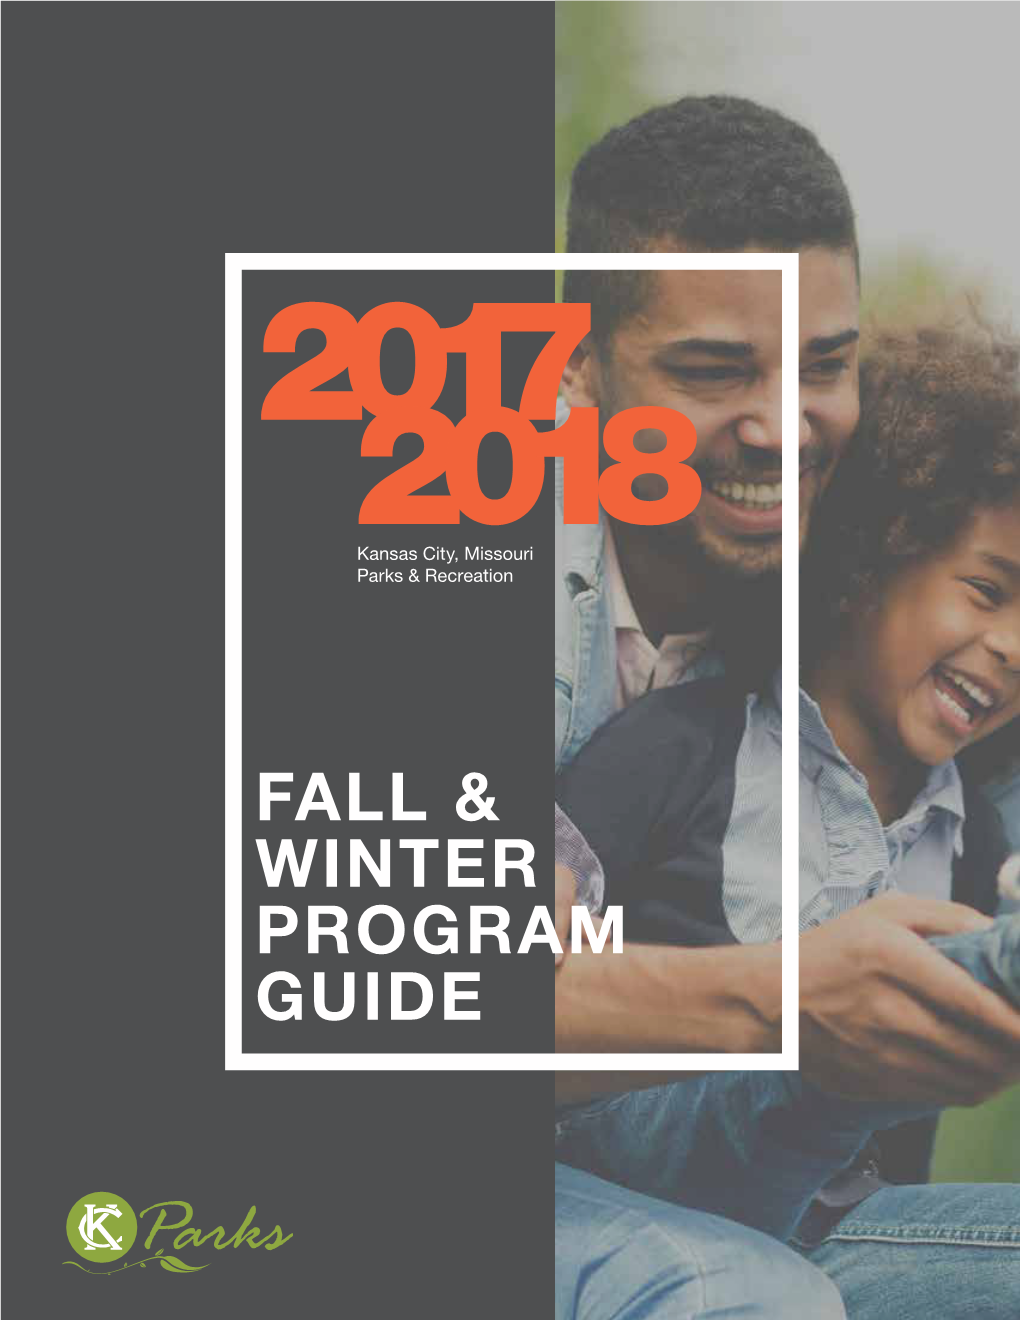 Fall & Winter Program Guide